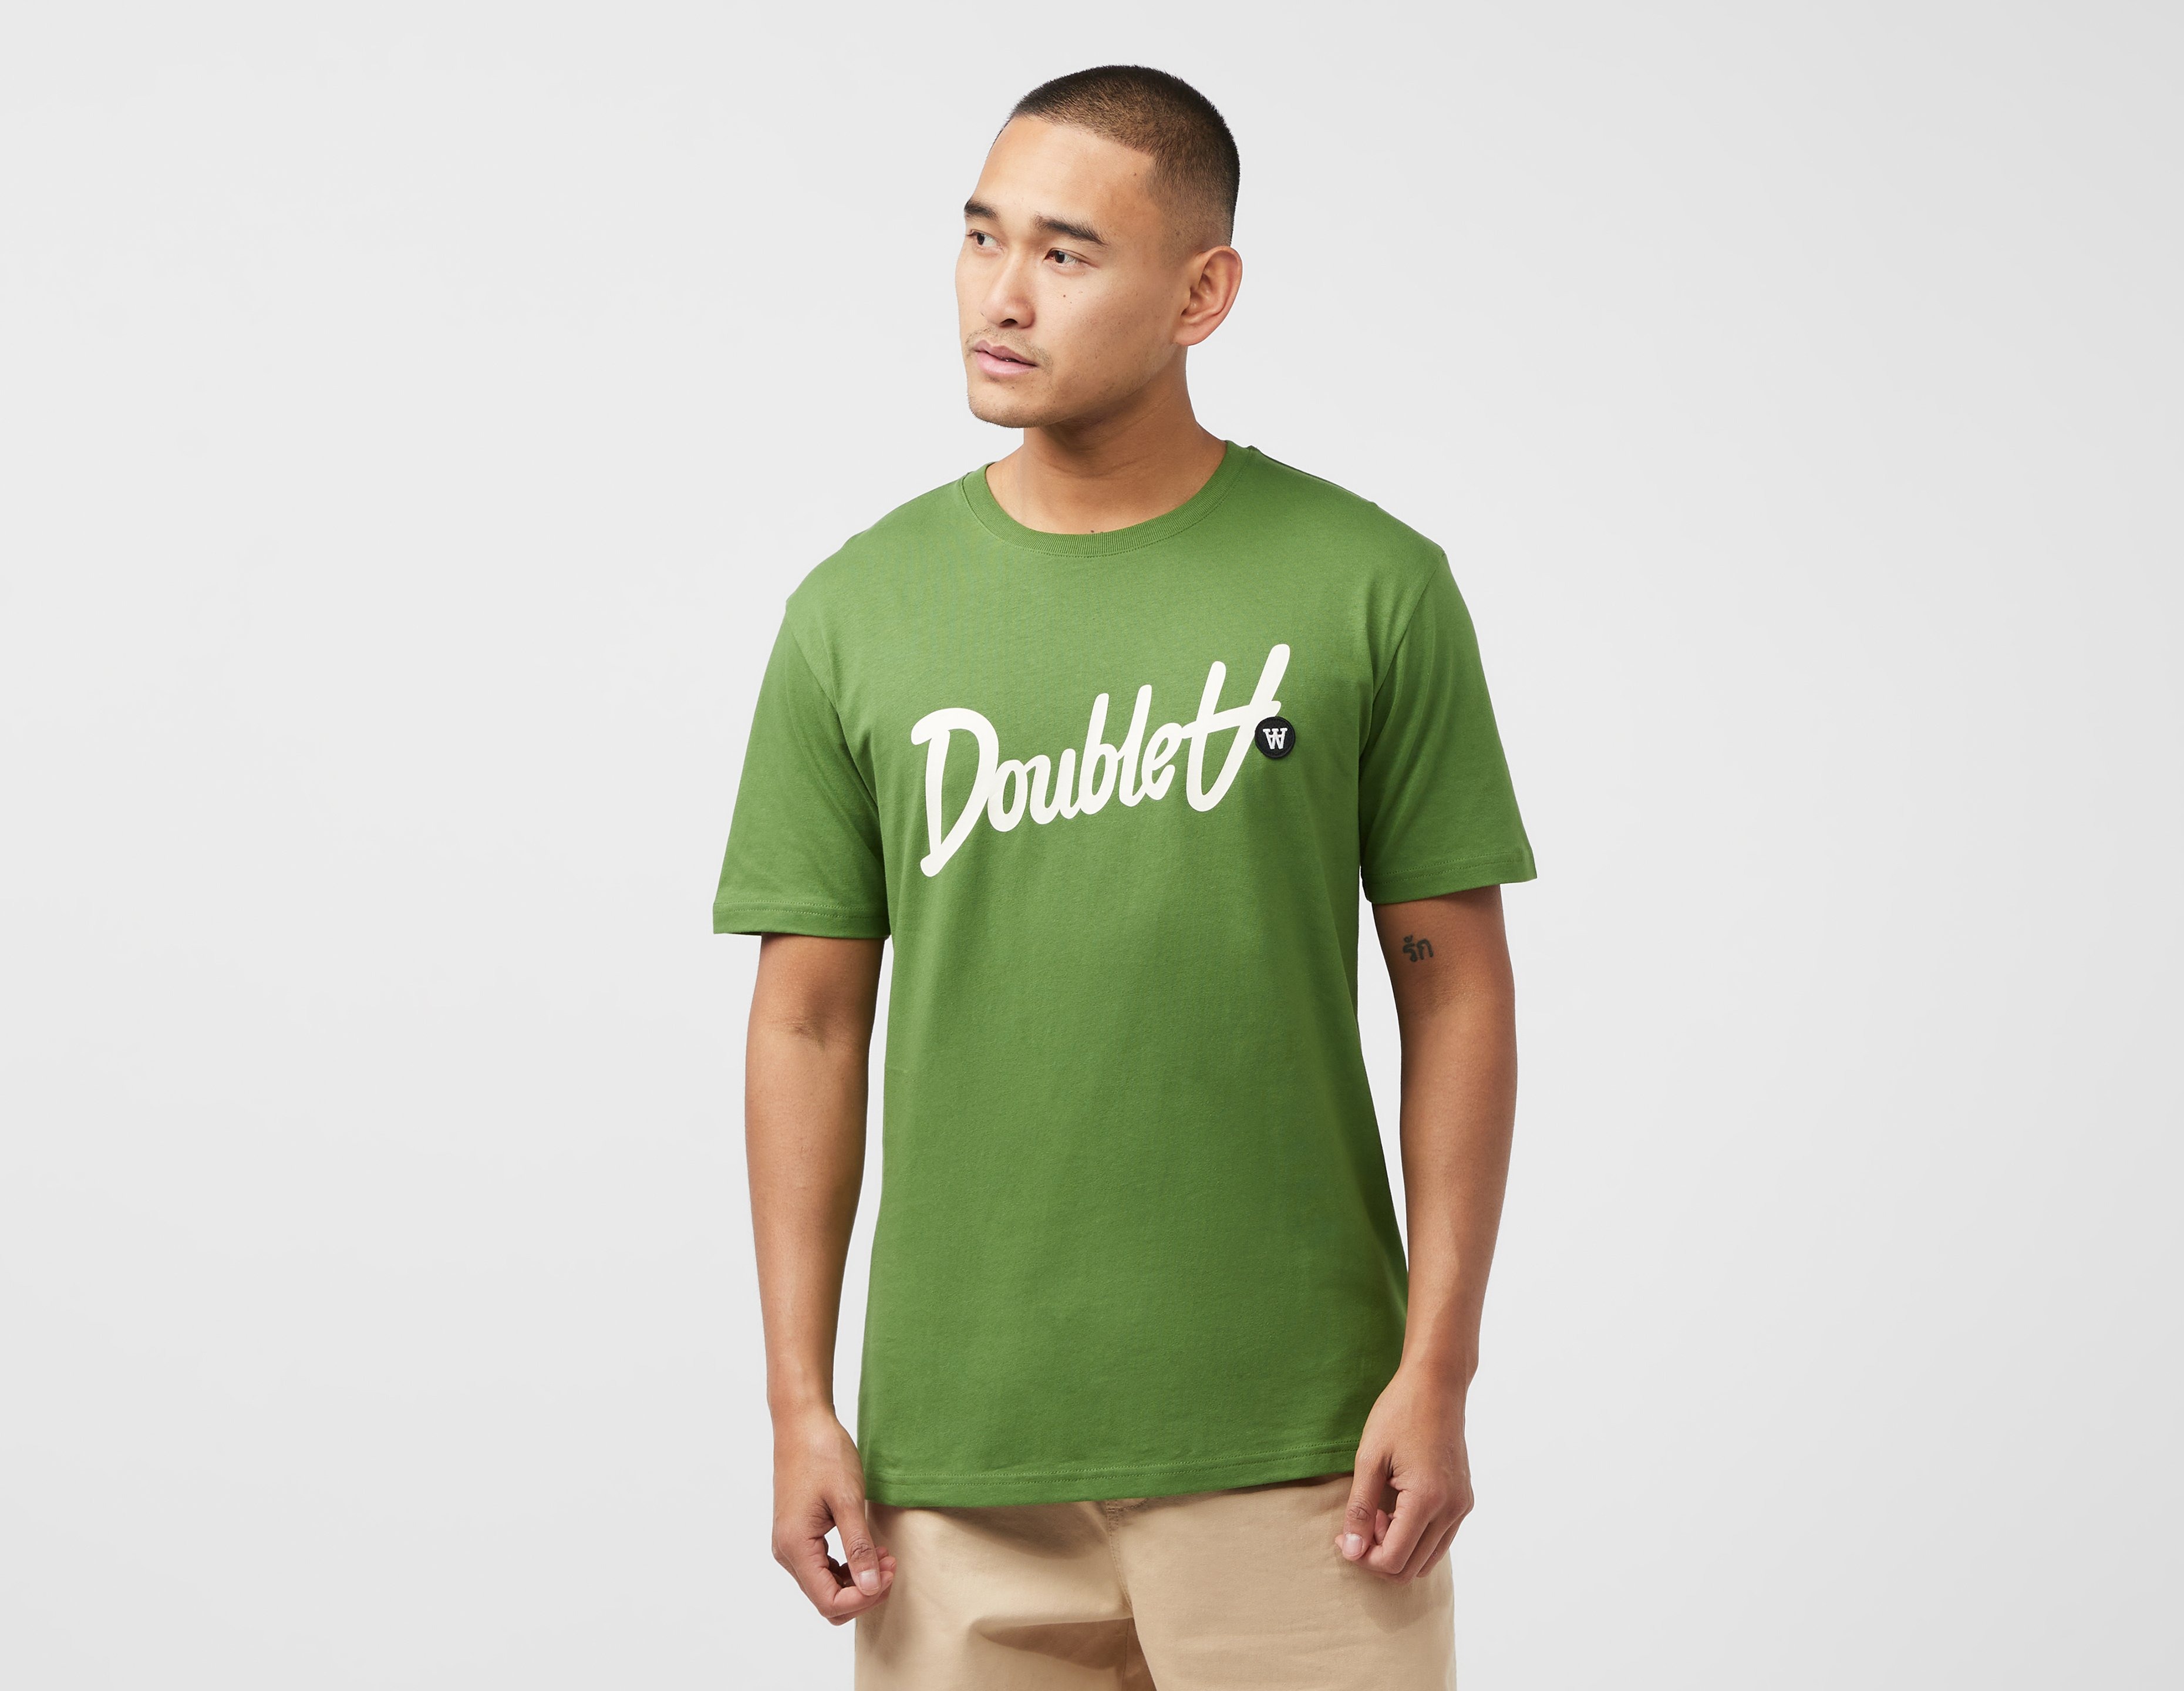 Wood neutri Ace sweatshirt | cotton Green Script A - Wood Shirt - Healthdesign? Trey Toni by Double T Klassic